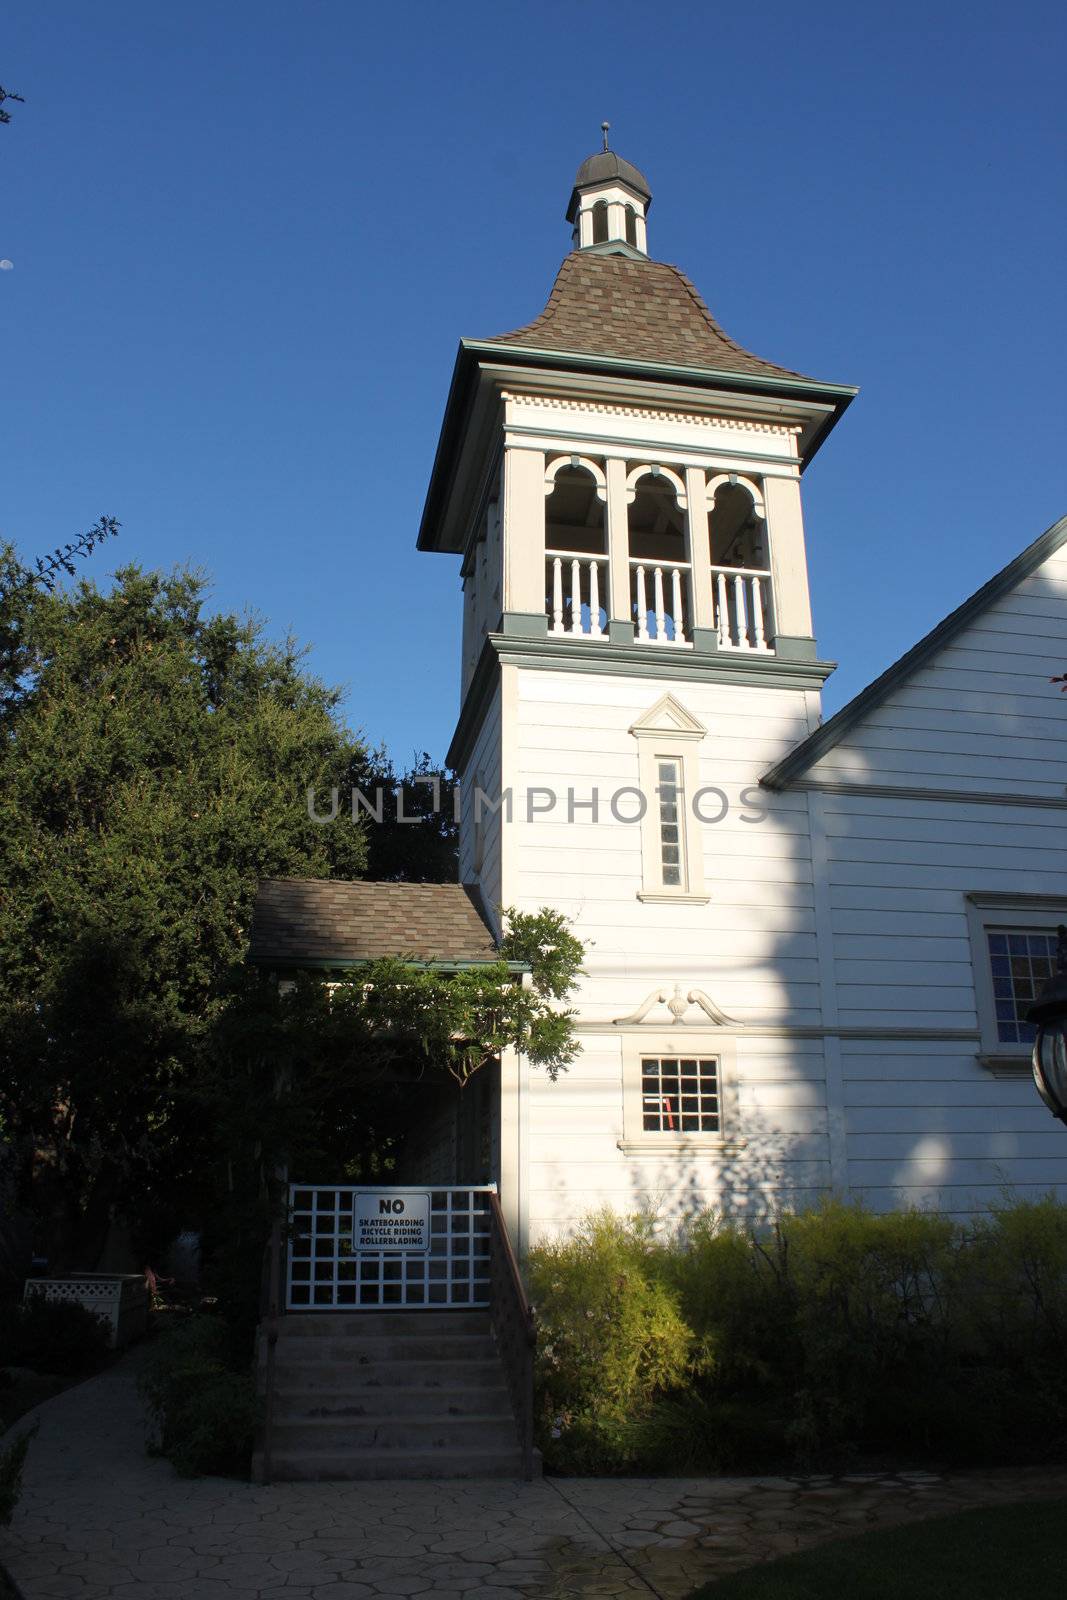 Bell tower of the Nazarene Church in Ojai California